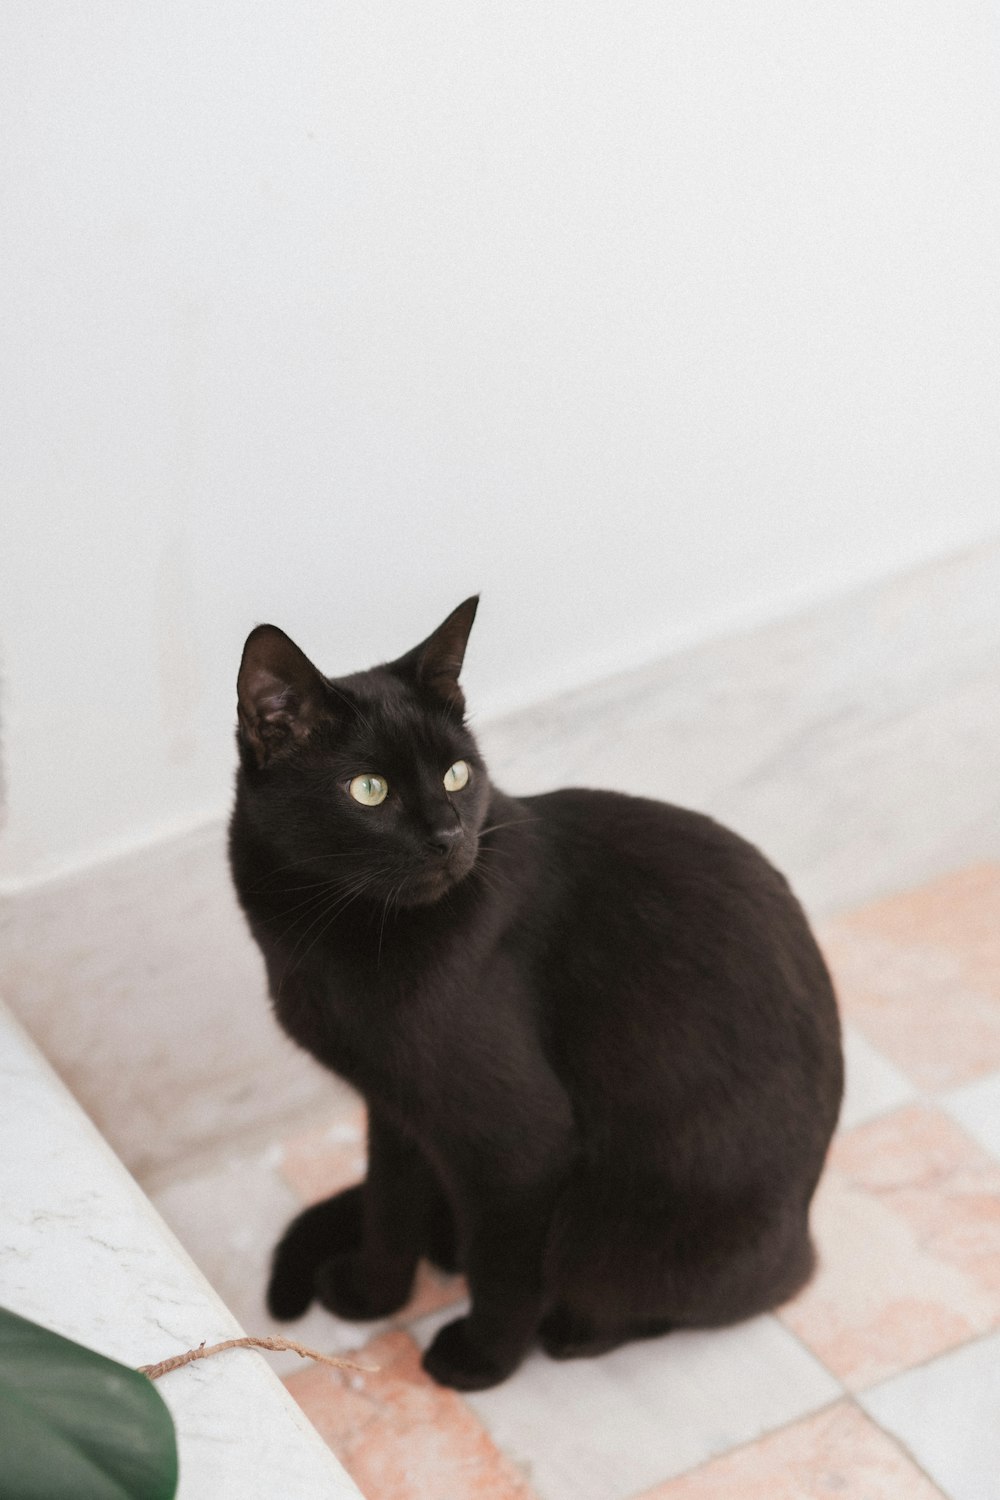 a black cat sitting on a tiled floor